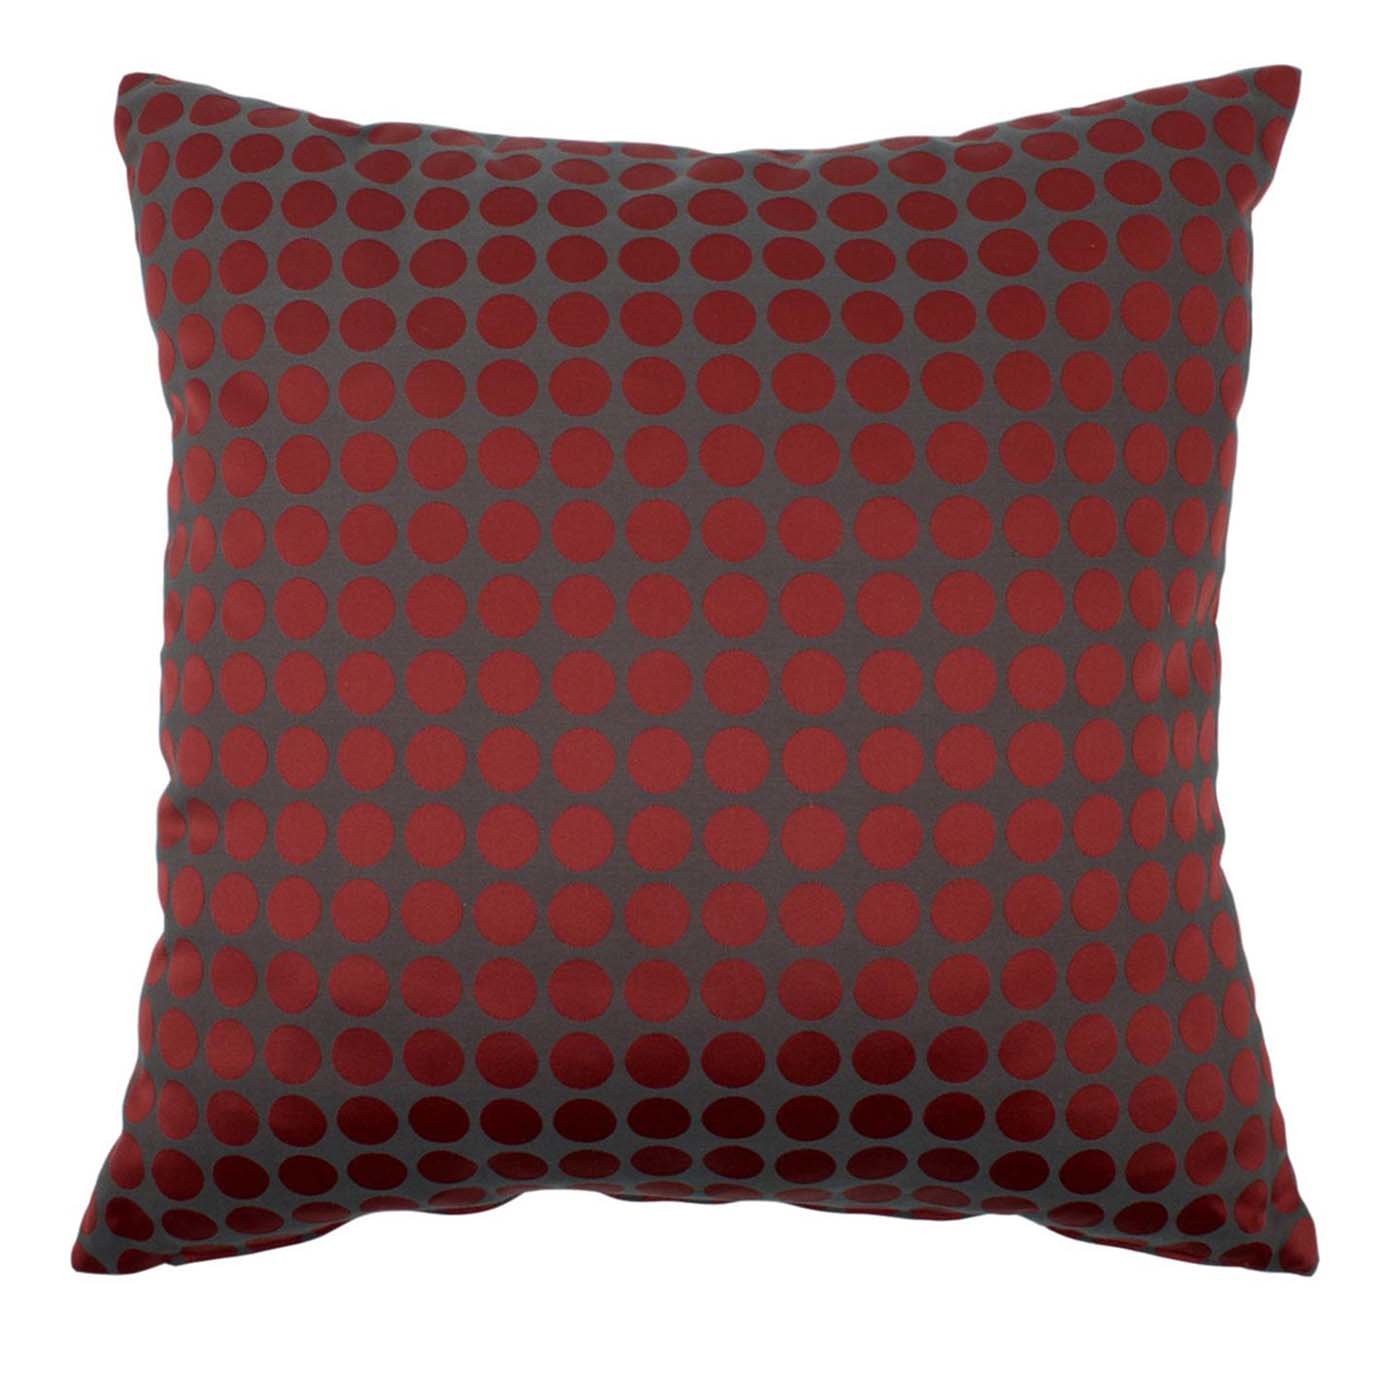 Dark Red Carrè Cushion in polka dots jacquard fabric - Main view